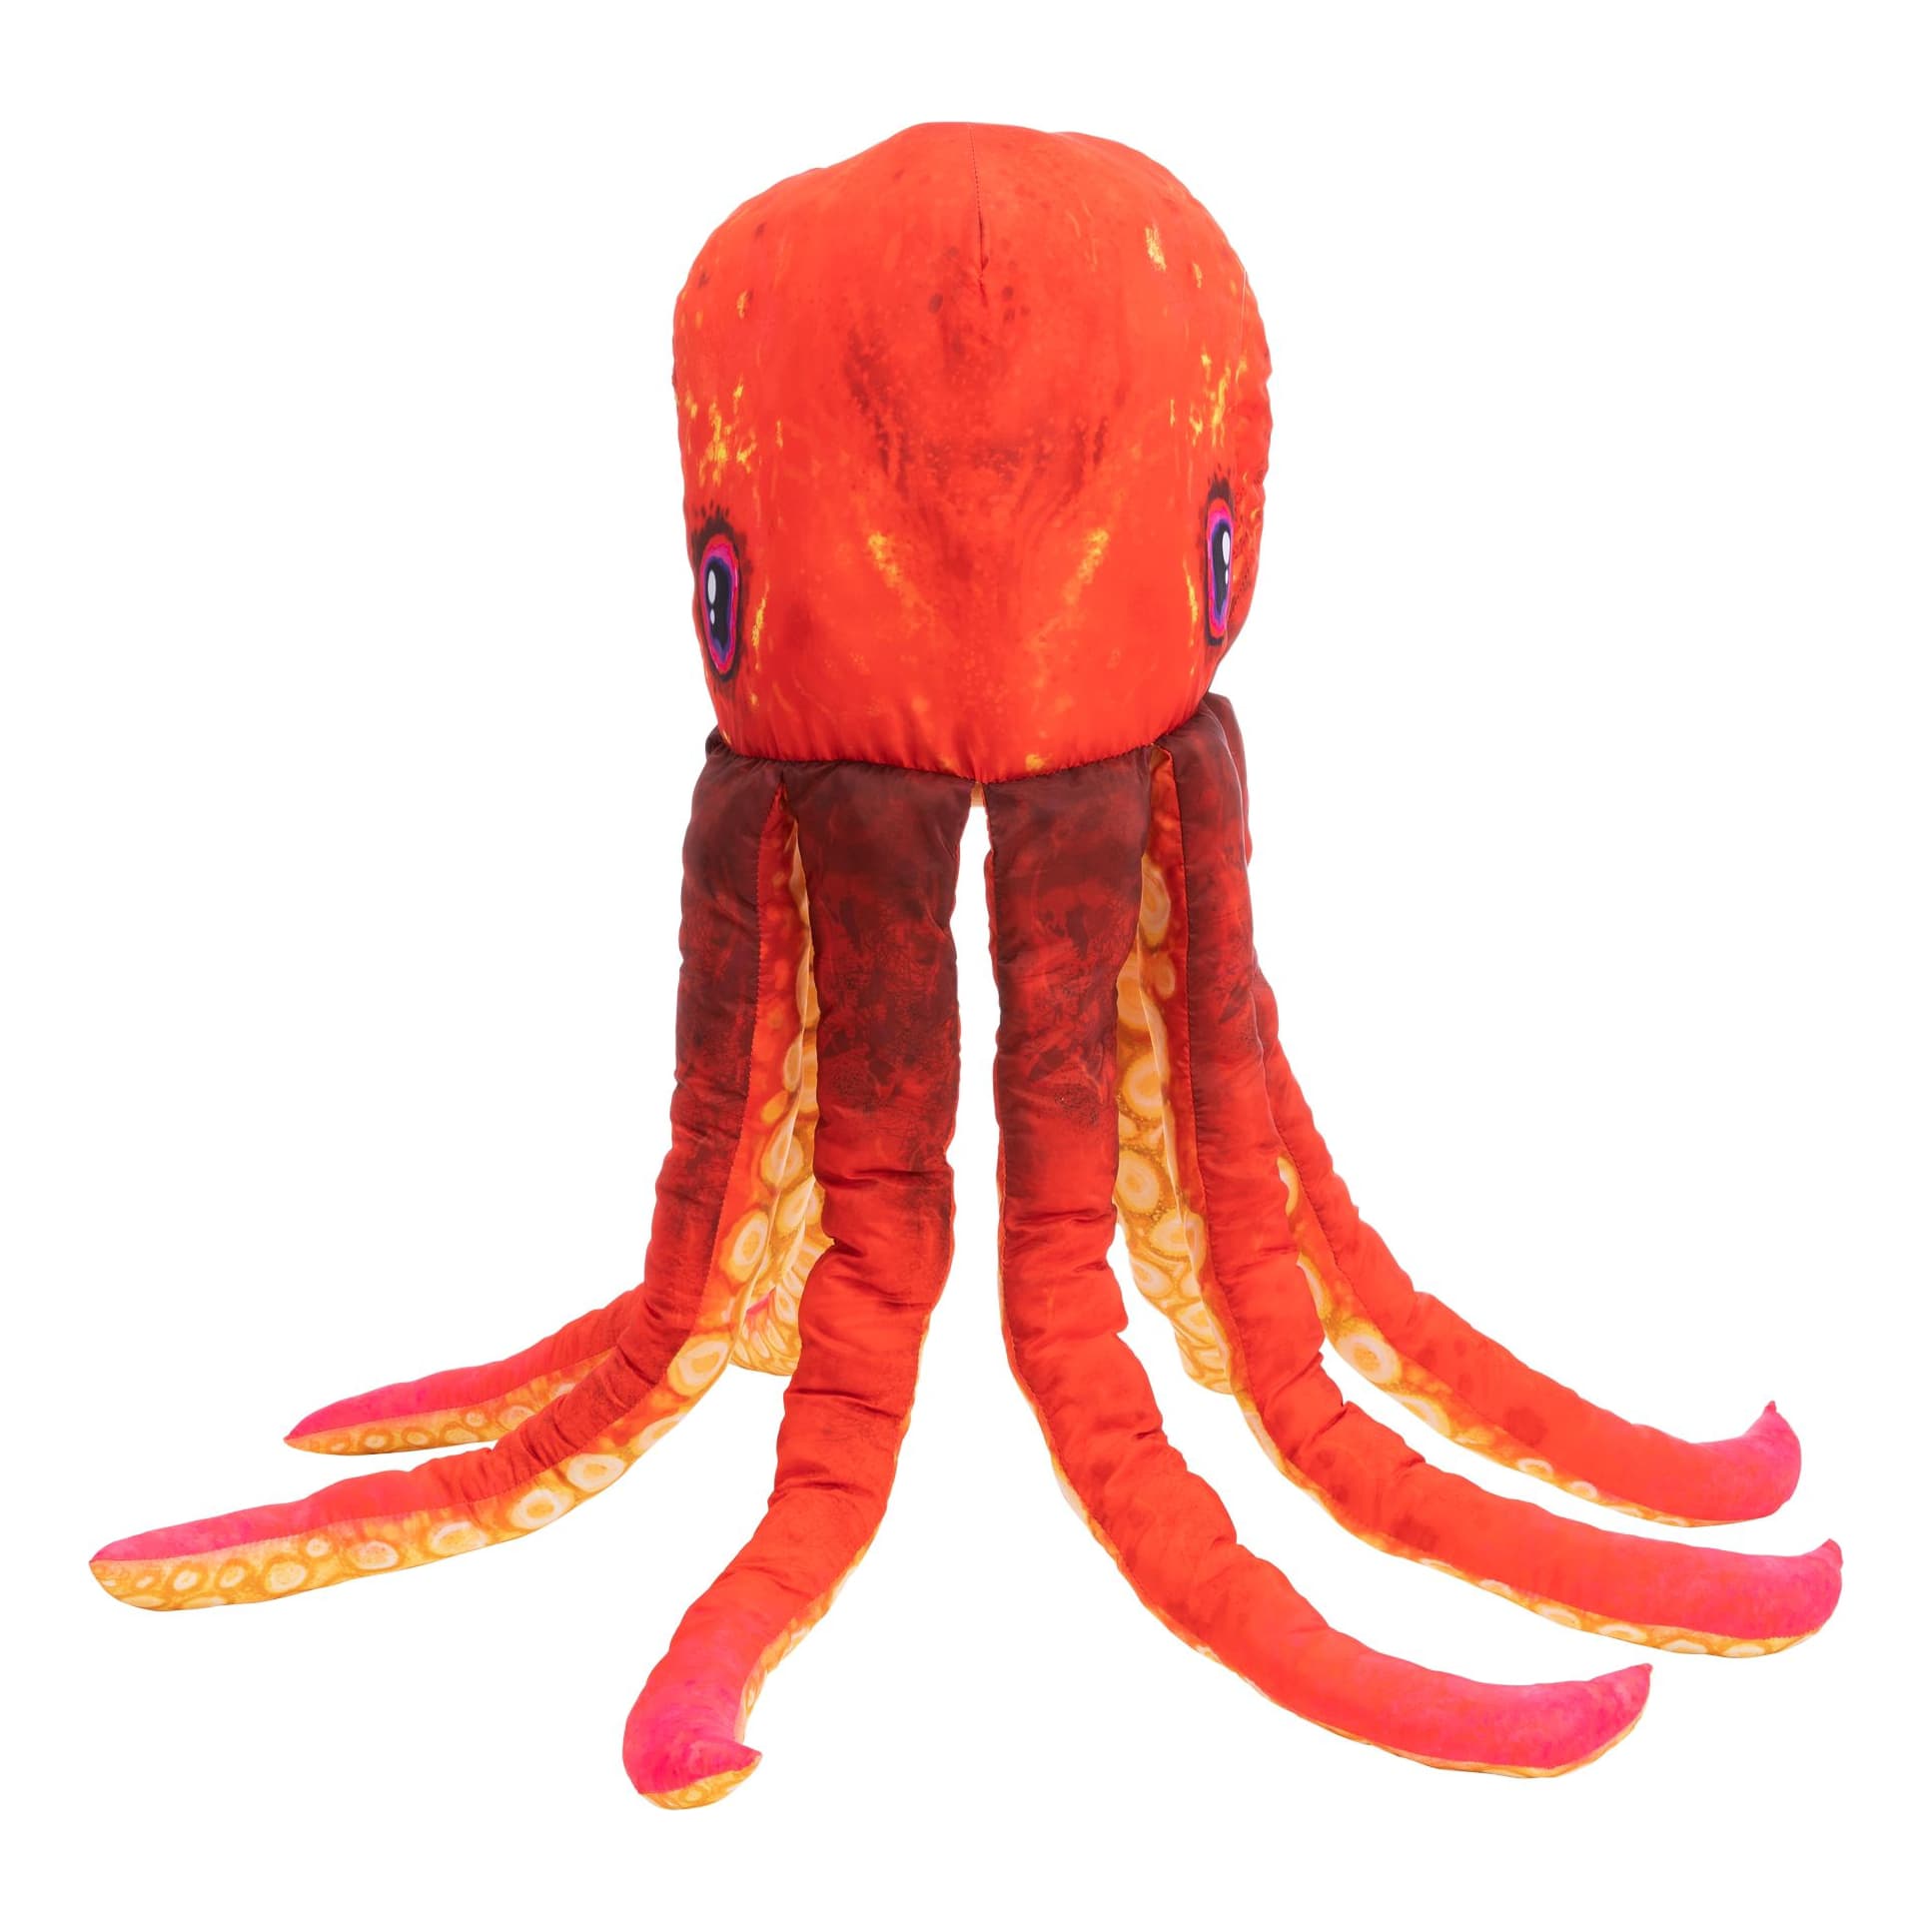 Bass Pro Shops Giant Octopus Stuffed Toy for Kids - Cabelas - BASS